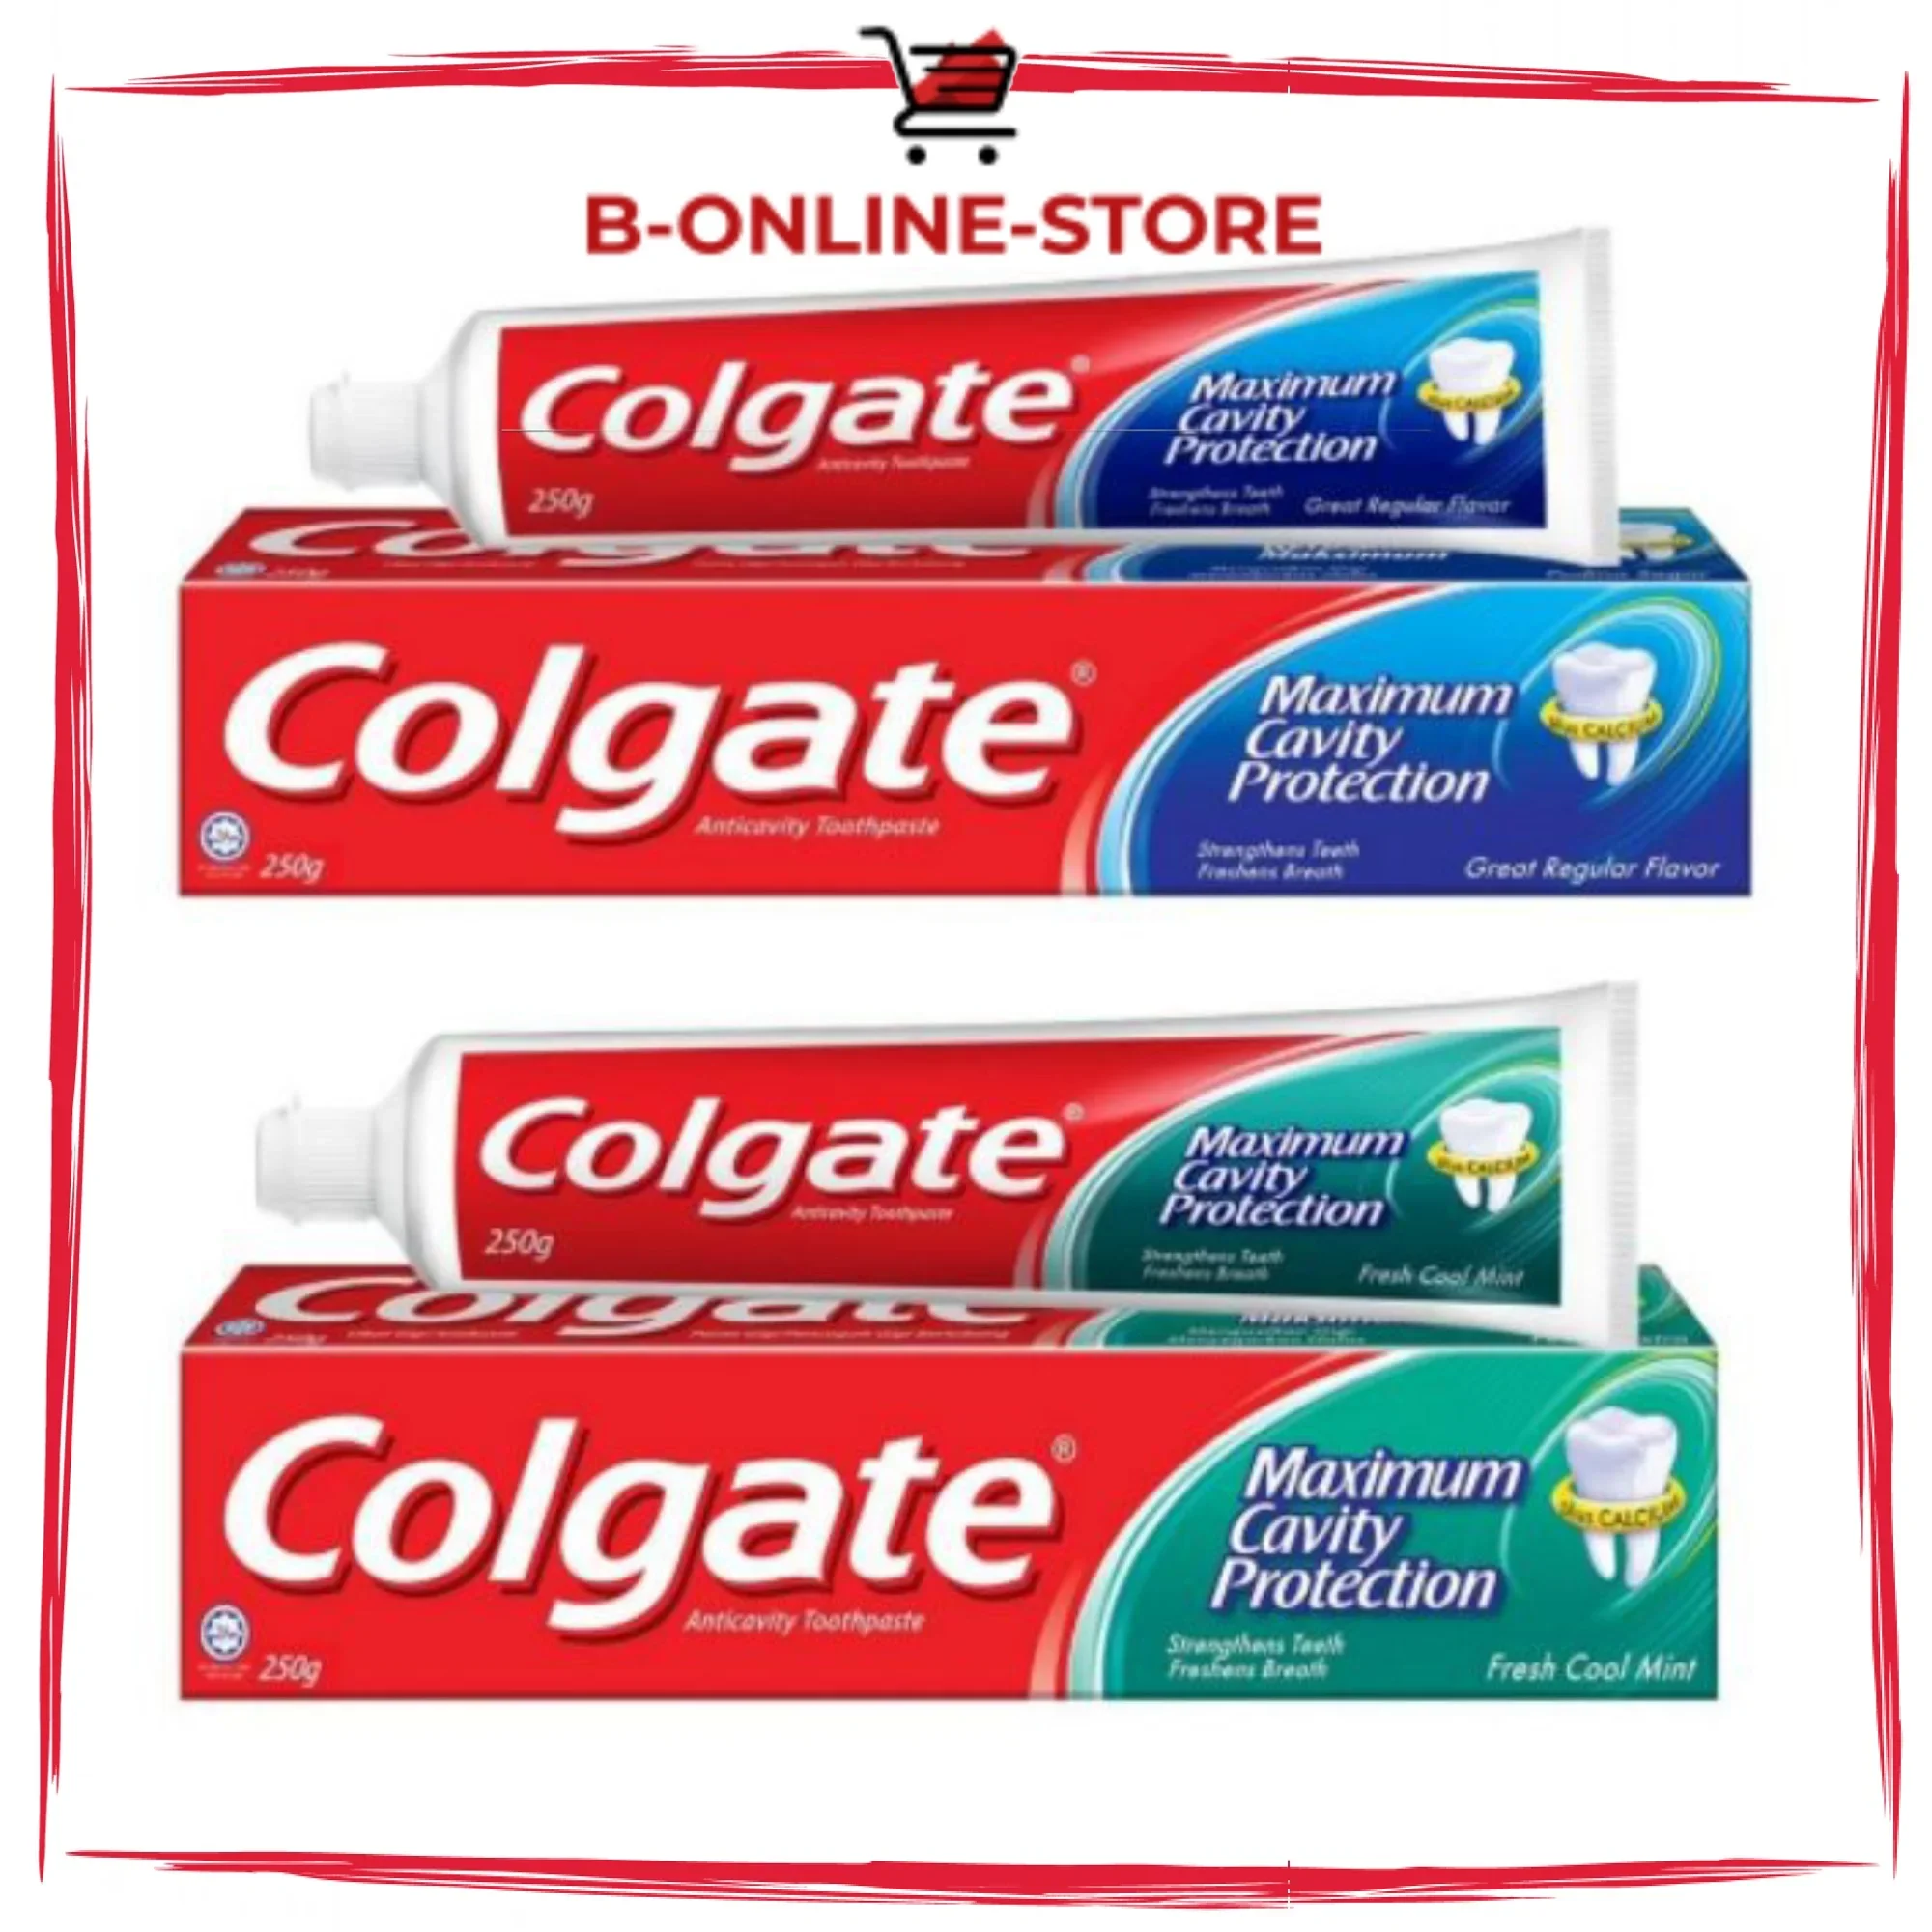 Colgate Anti cavity Toothpaste 250g / Ubat Gigi 250g